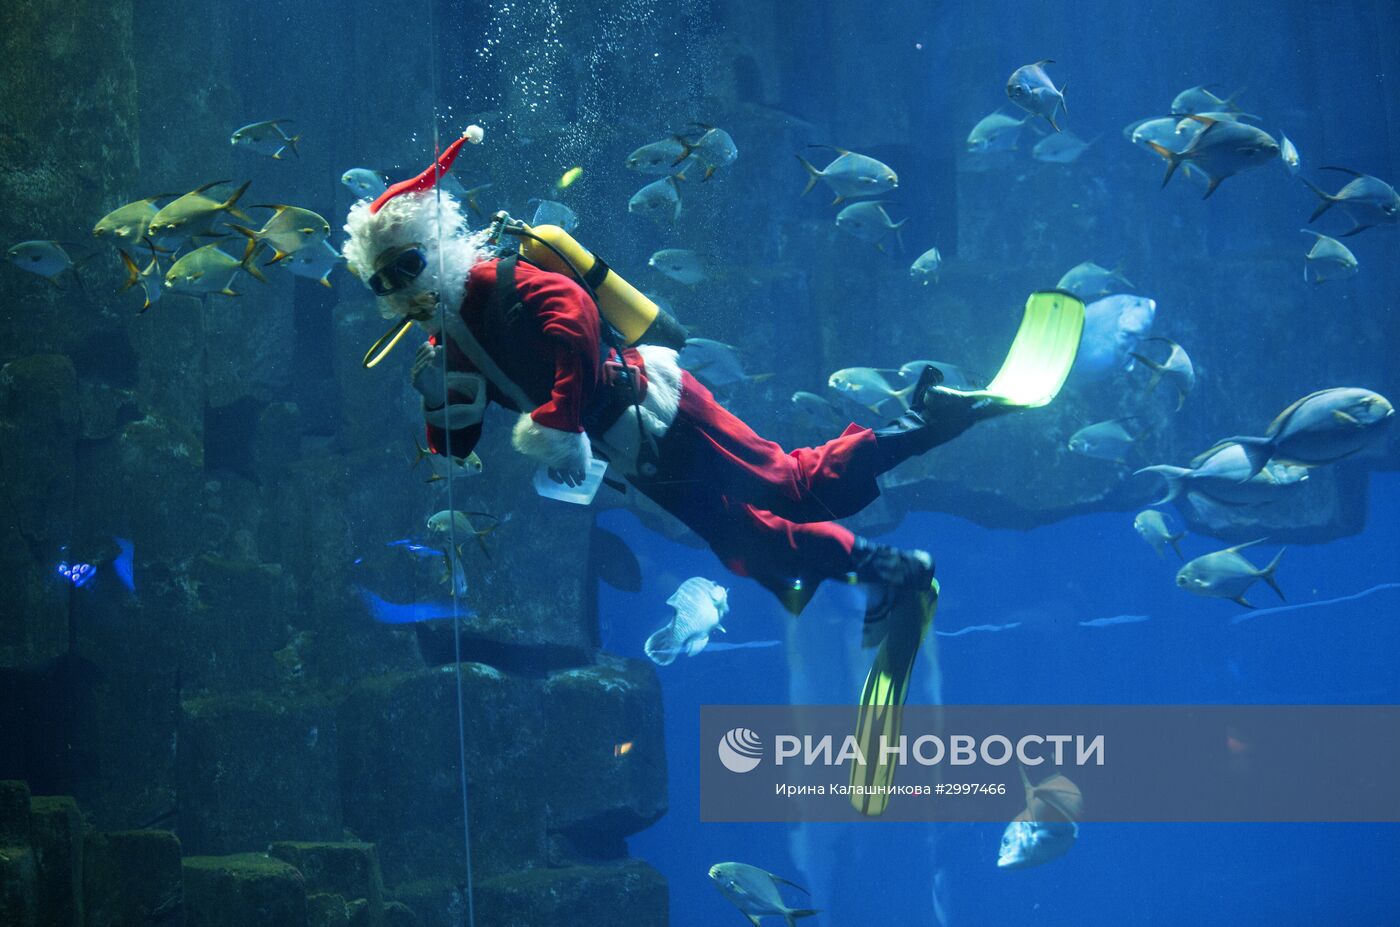 Человек в костюме Санта Клауса приветствует посетителей аквариума в Париже